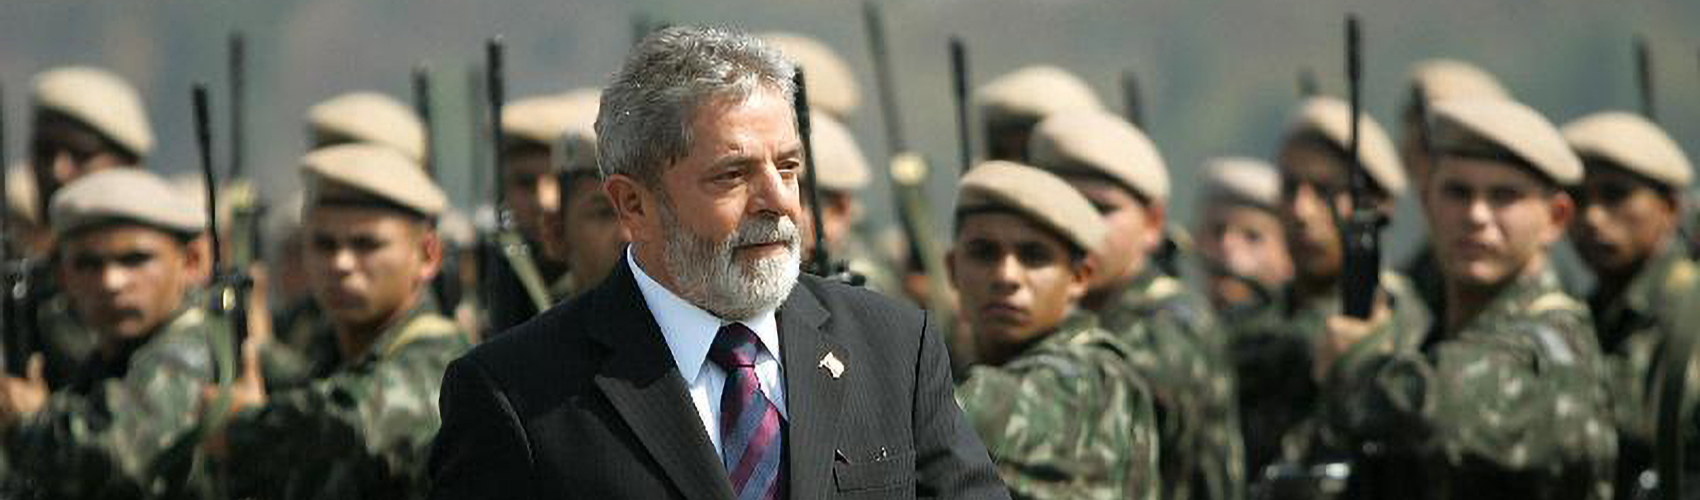 Exército, Defesa, GSI: as alternativas de Lula e o desafio de democratizar as Forças Armadas